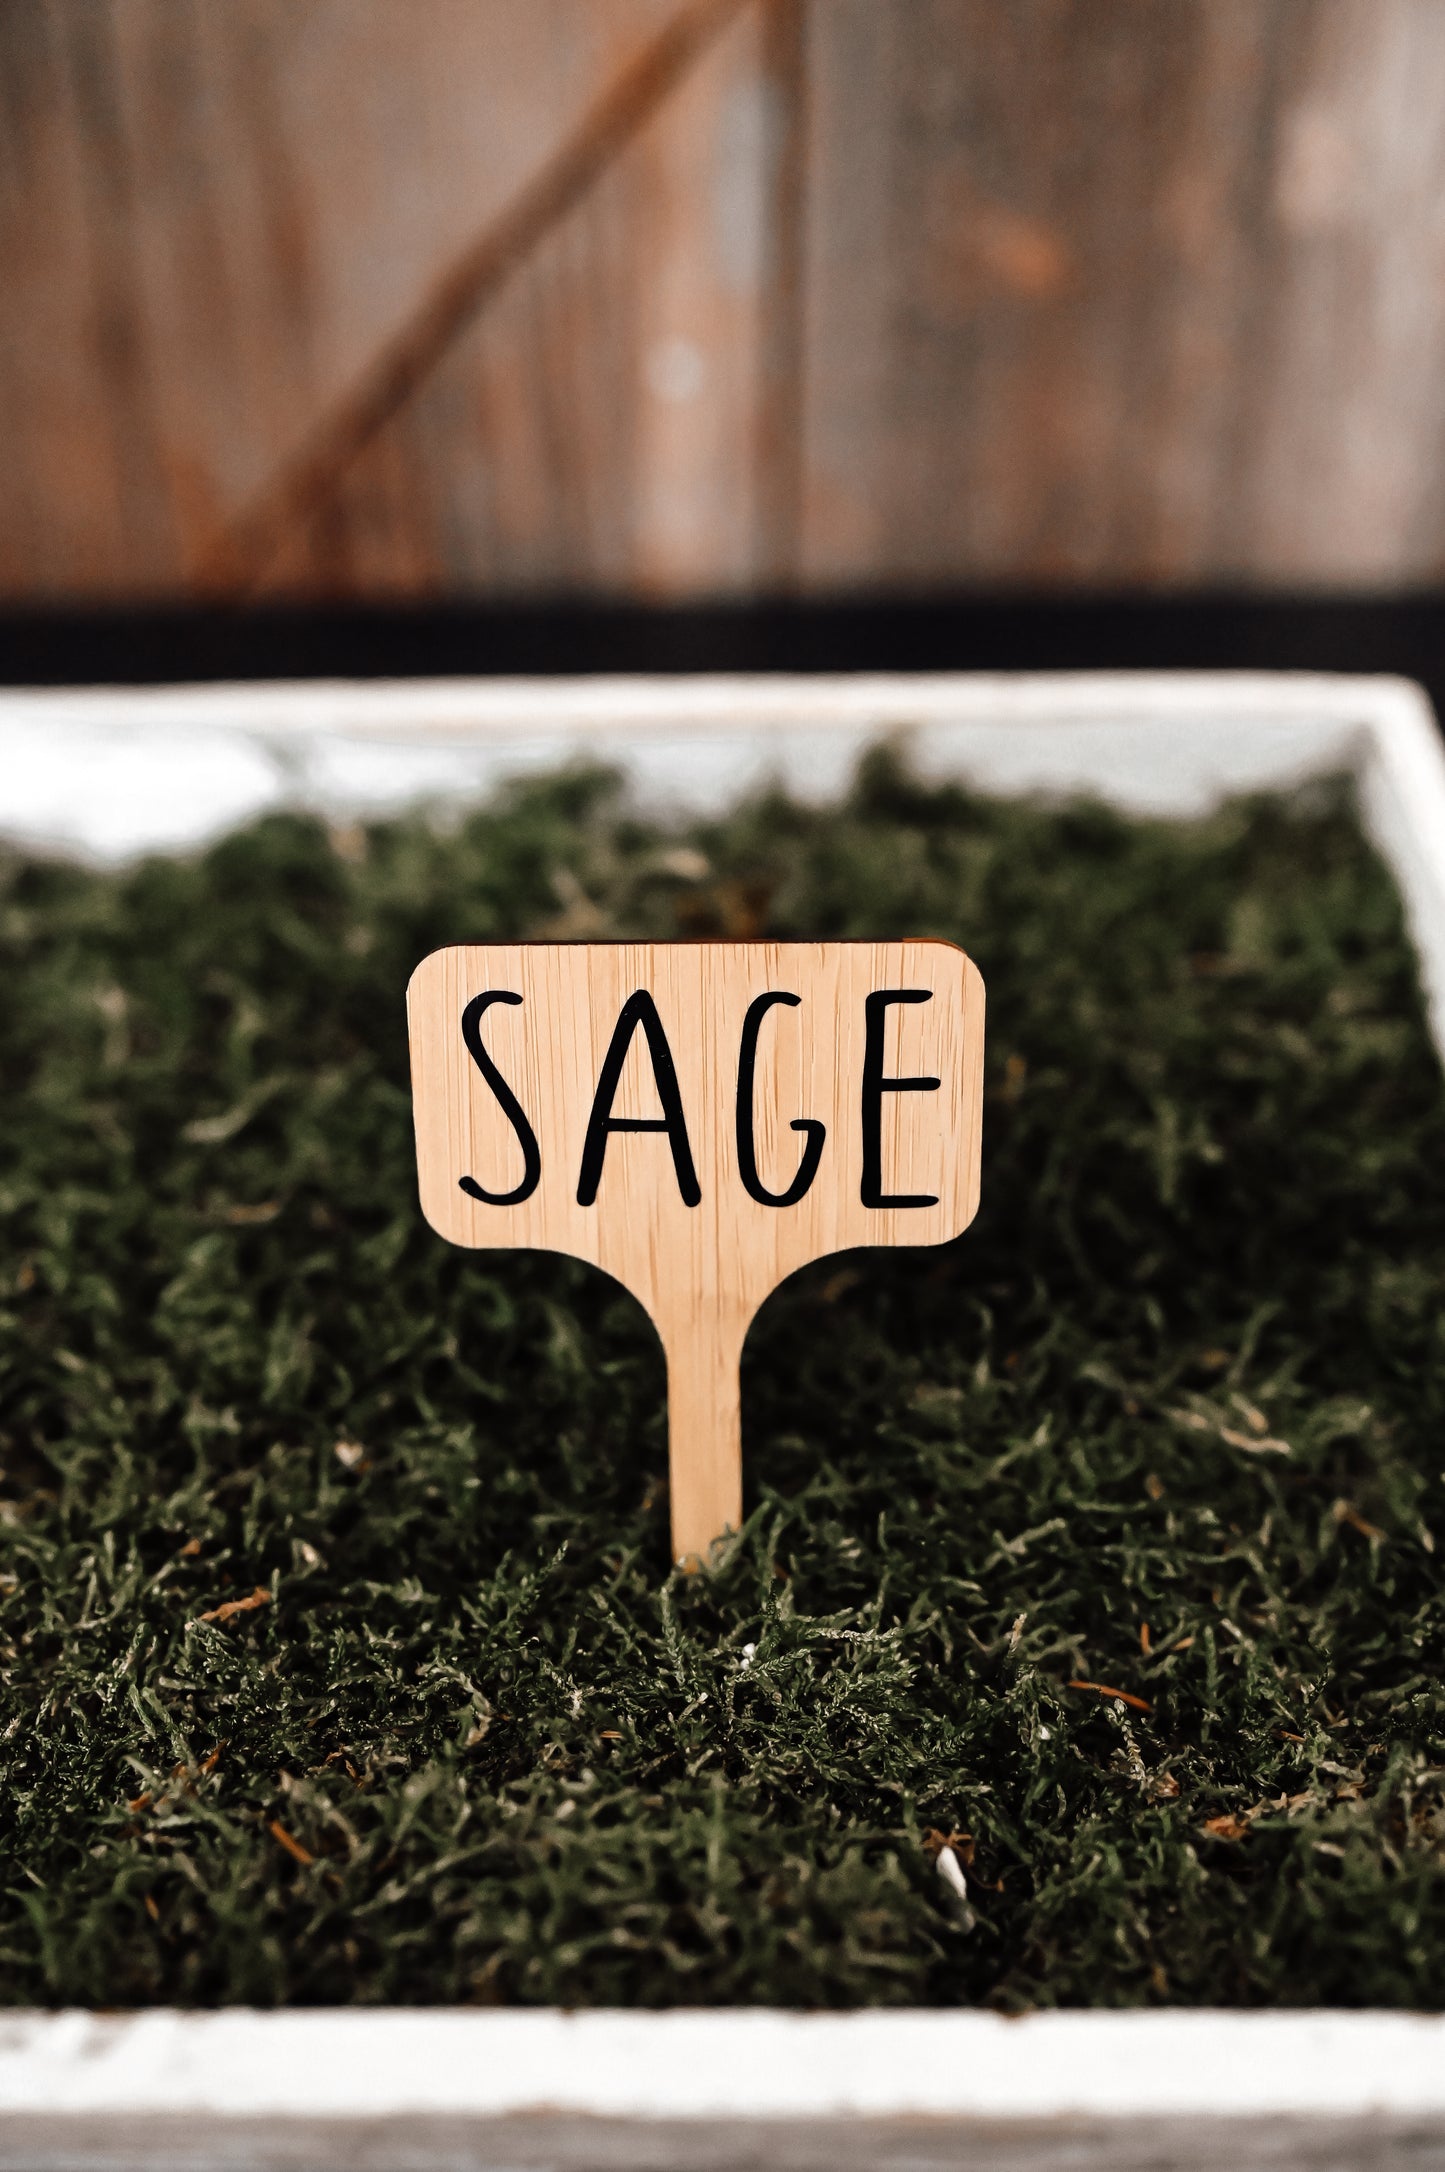 sage-garden-stake